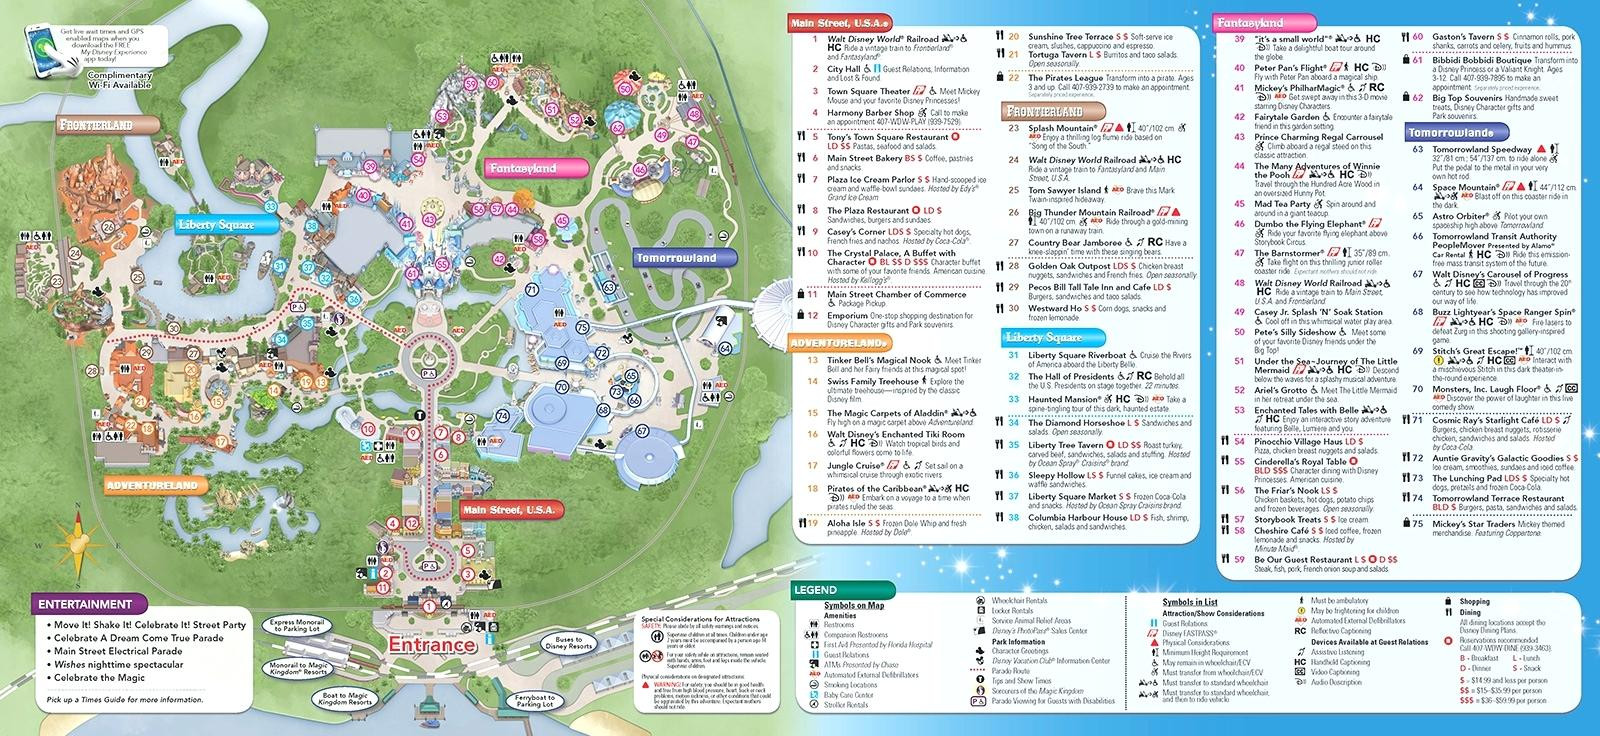 Printable Disney Map 2018 Beautiful Printable Disney World Maps Furlongs Me At